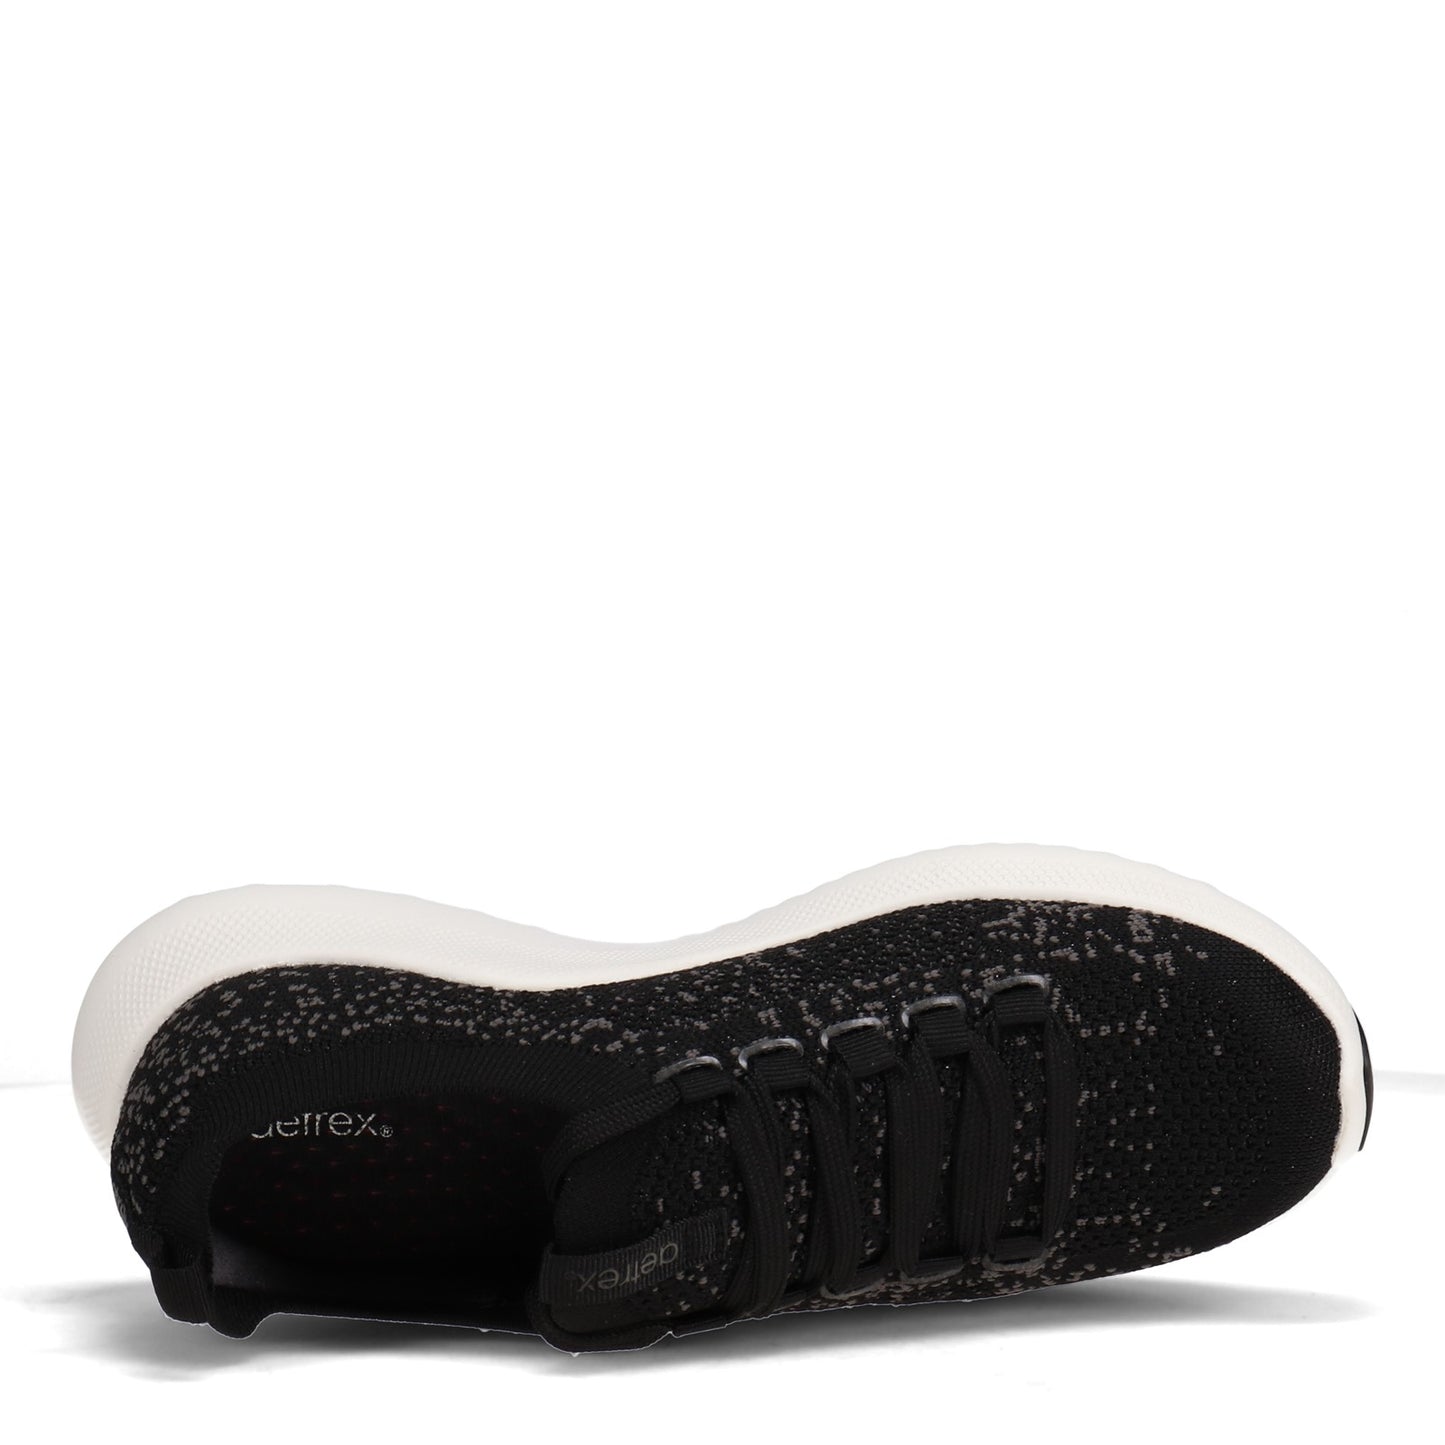 Peltz Shoes  Women's Aetrex Carly Sneaker BLACK AS100-BLACK